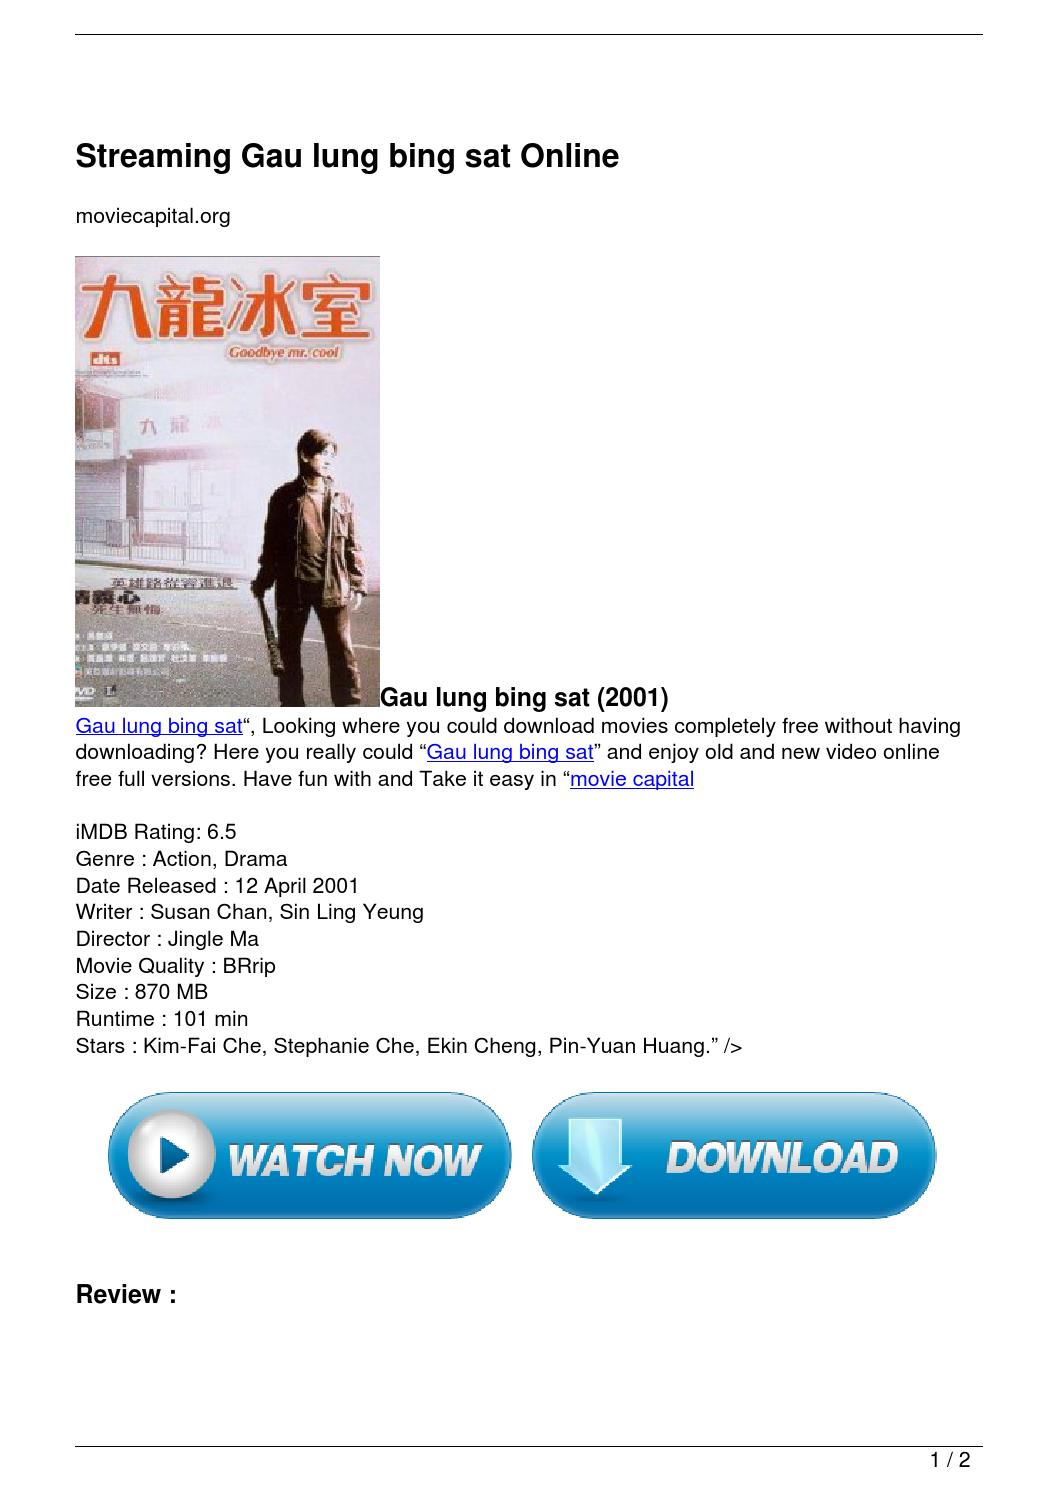 Nonton Film Ekin Cheng Online Goodbye Mr Cool